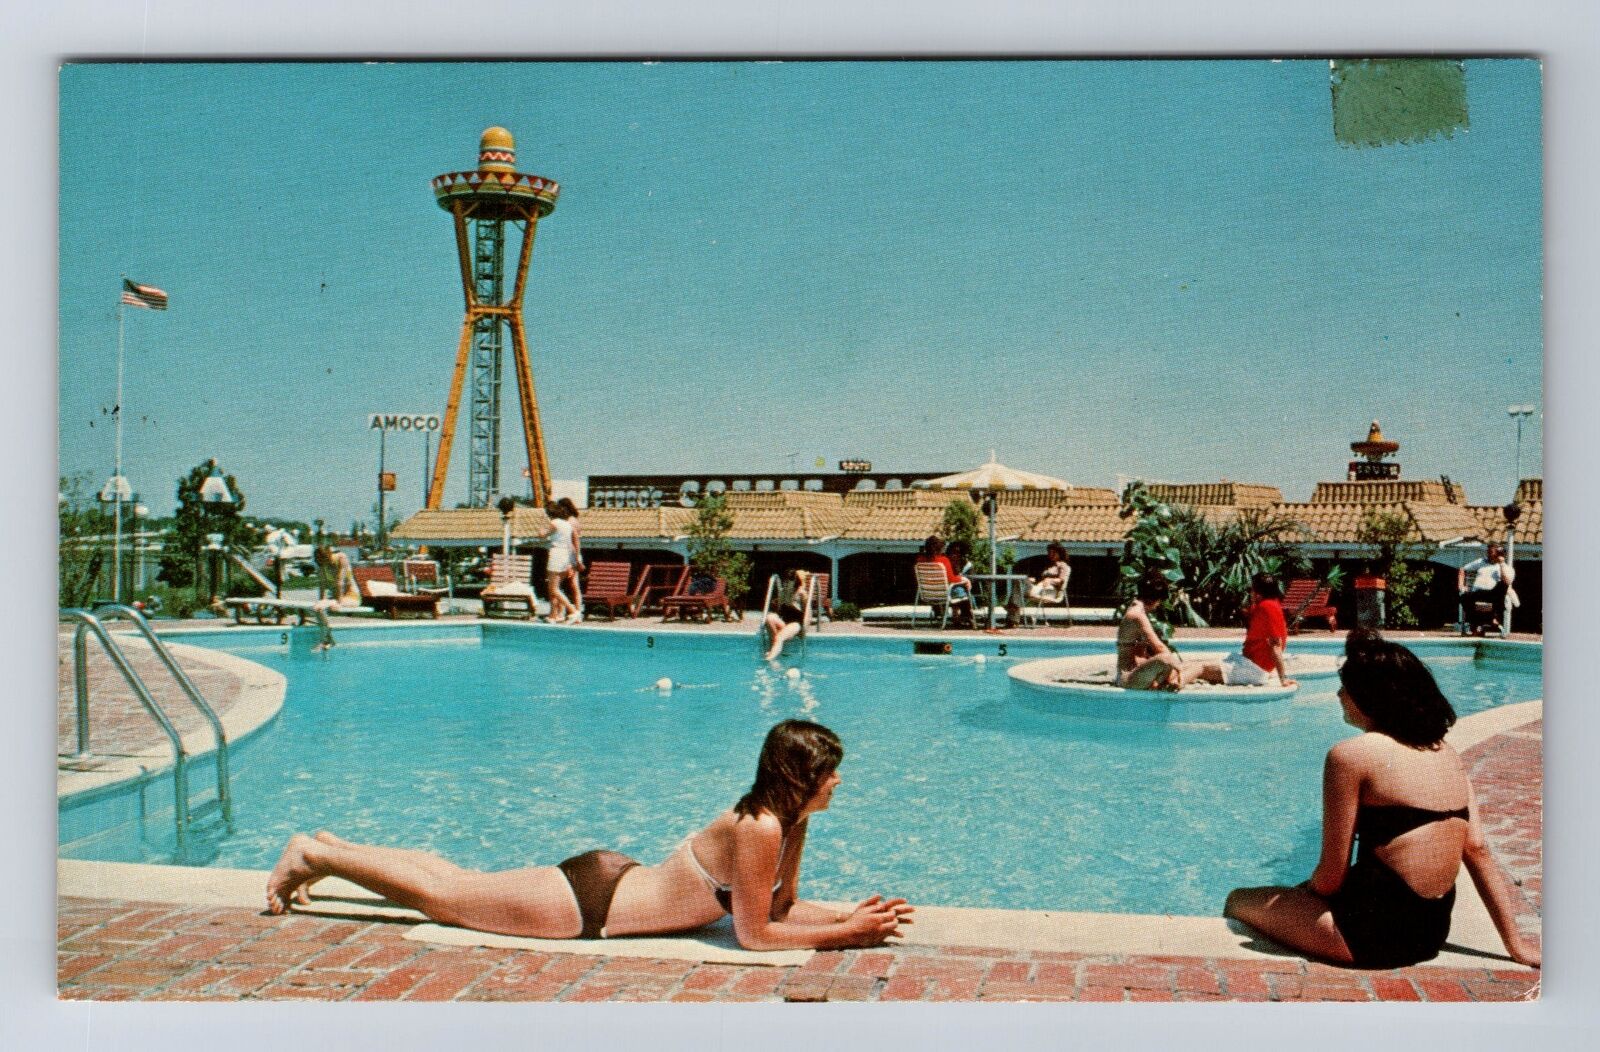 South Of The Border SC-South Carolina, Pedro's New Pool, Vintage Postcard